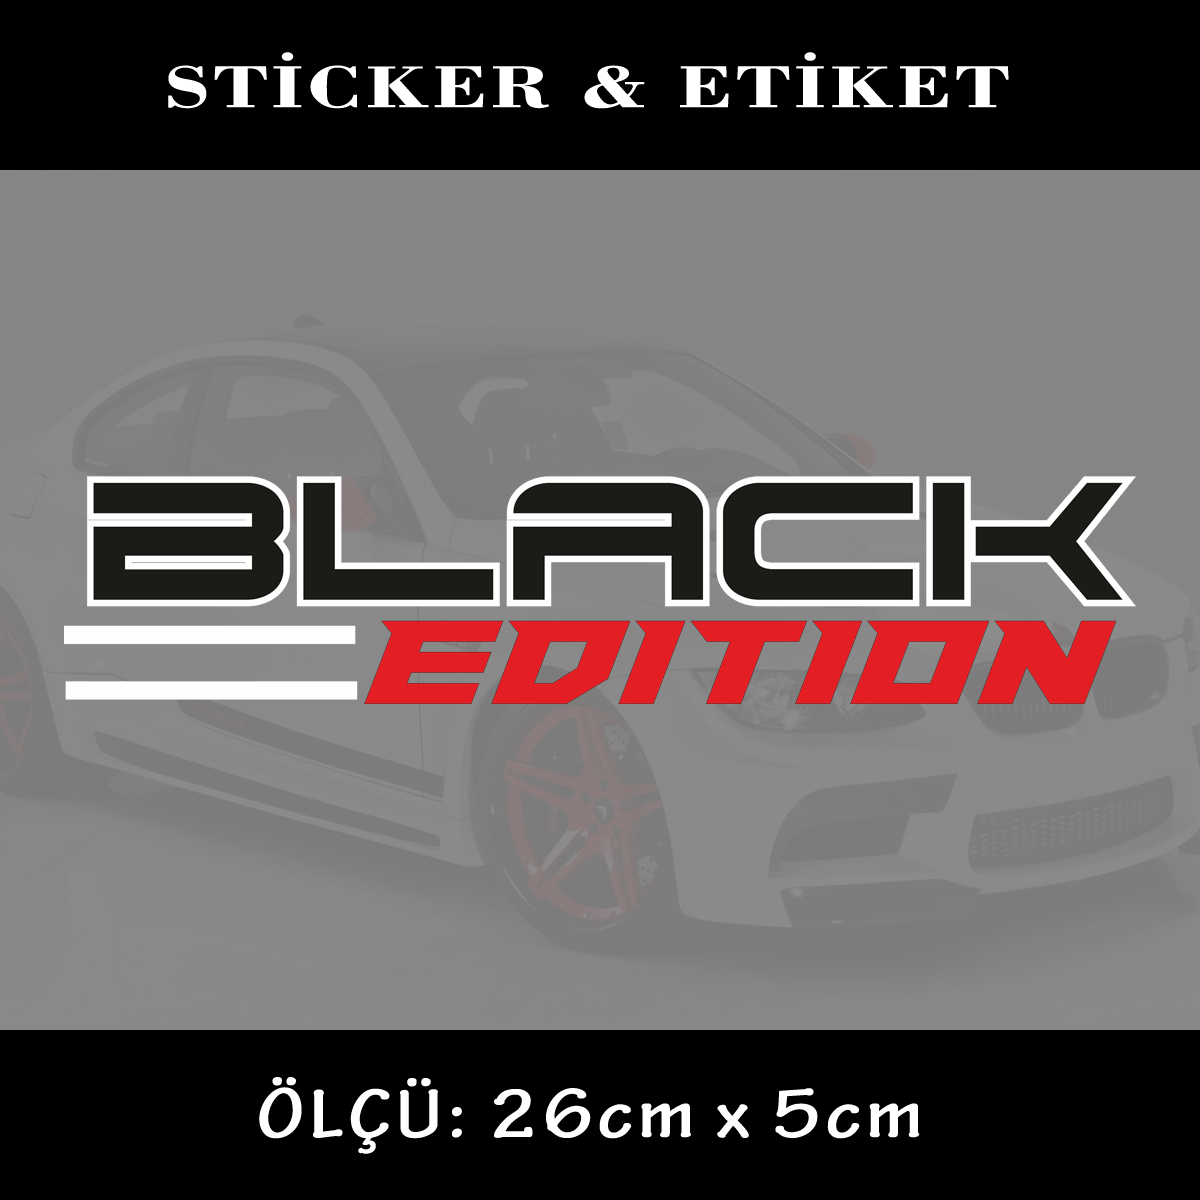 black edition - Black paket edition sticker